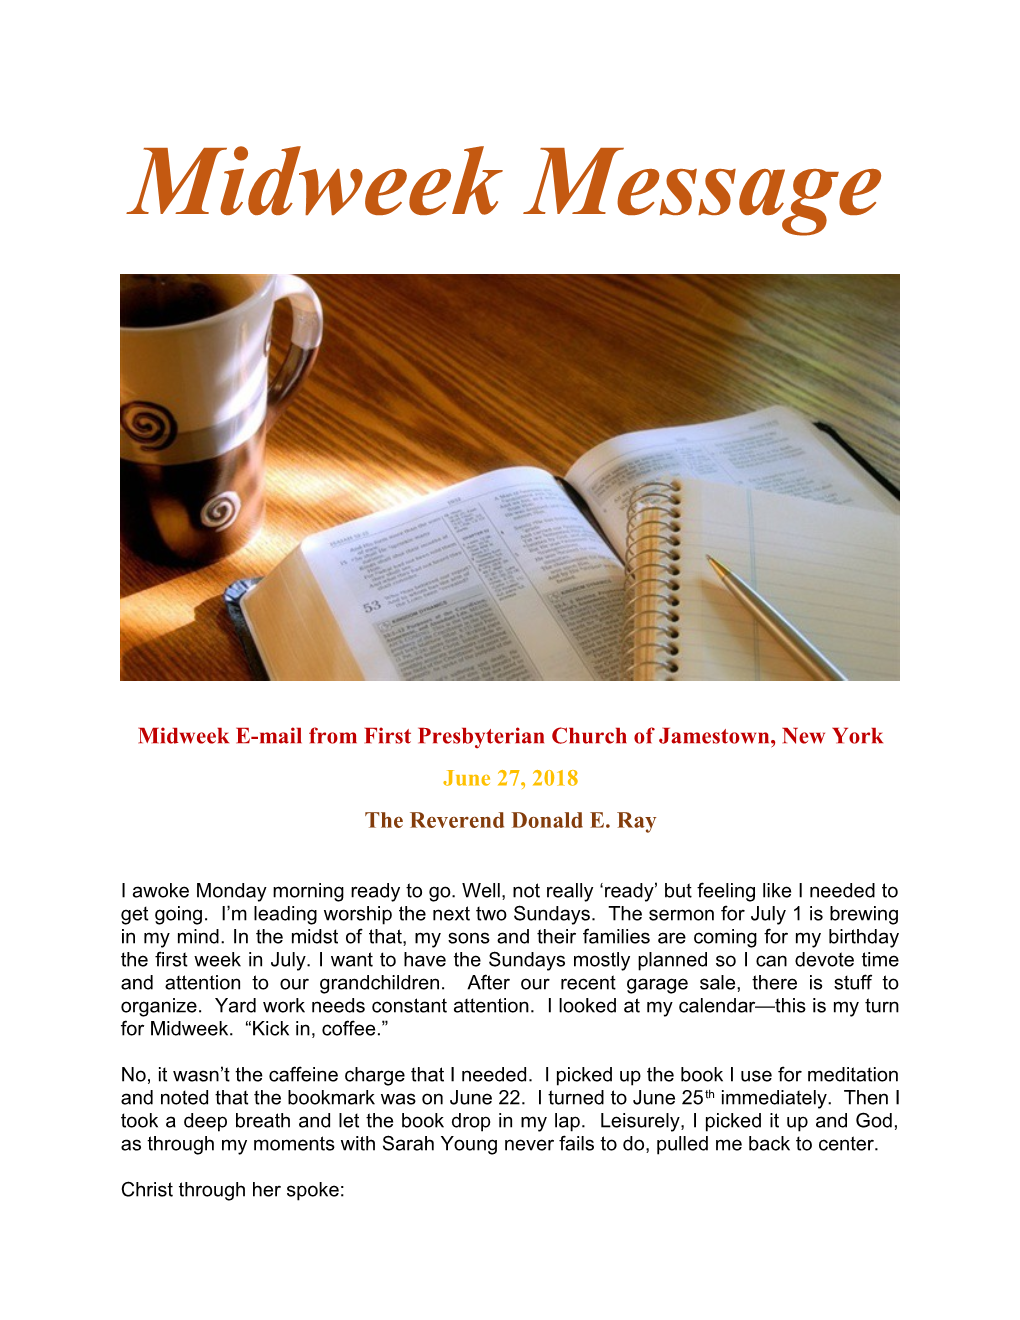 Midweek E-Mail from First Presbyterian Church of Jamestown, New York